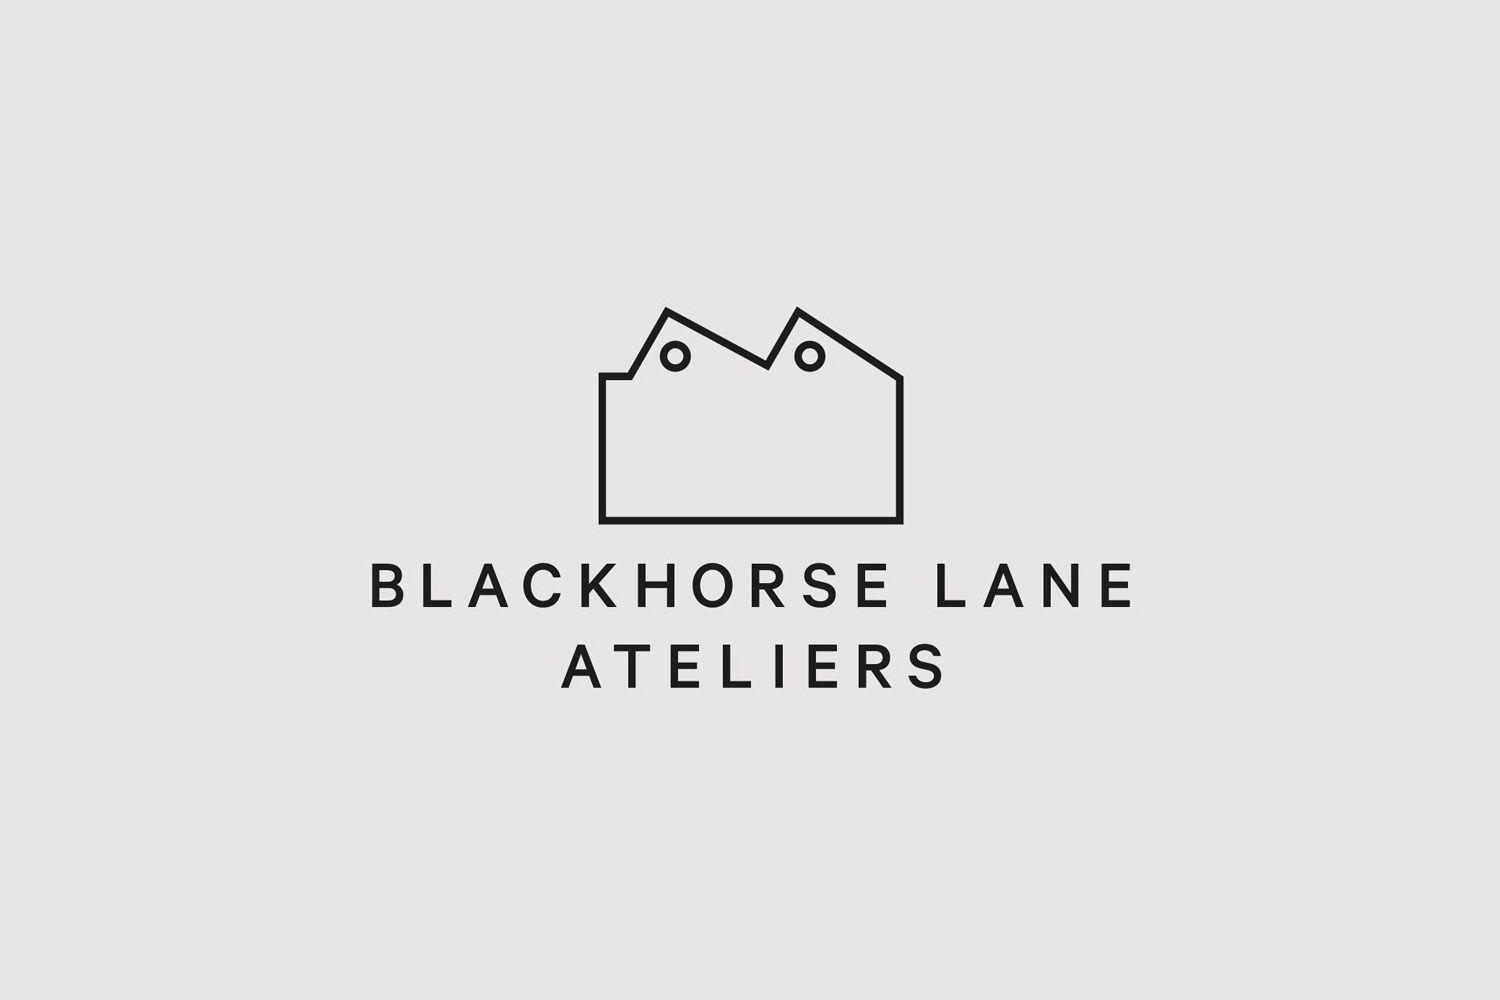 The Lane Logo - New Logo for Blackhorse Lane Ateliers